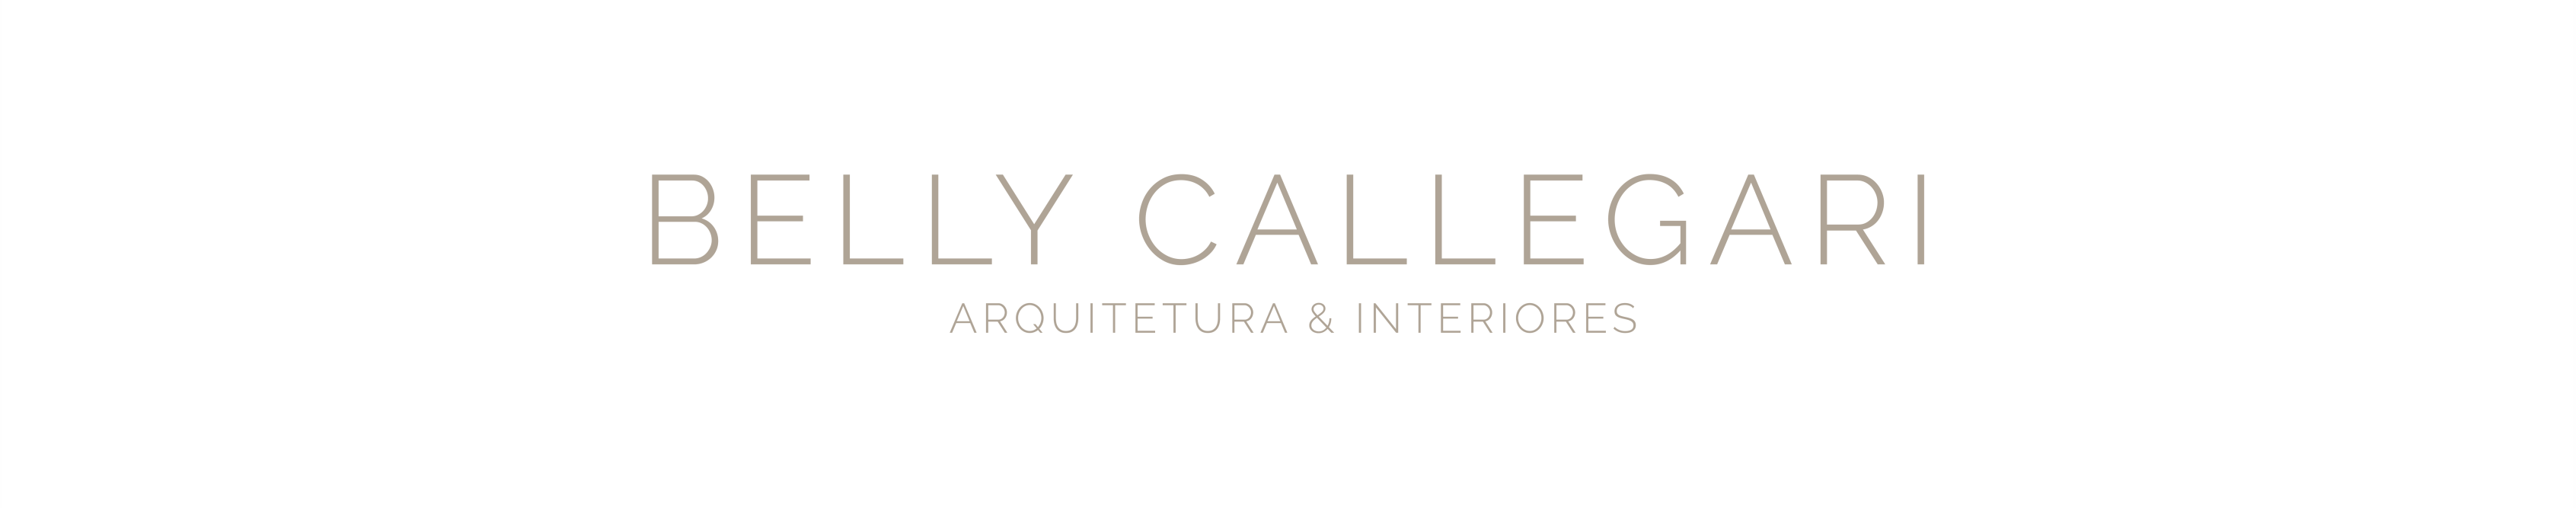 Belly Callegari's profile banner